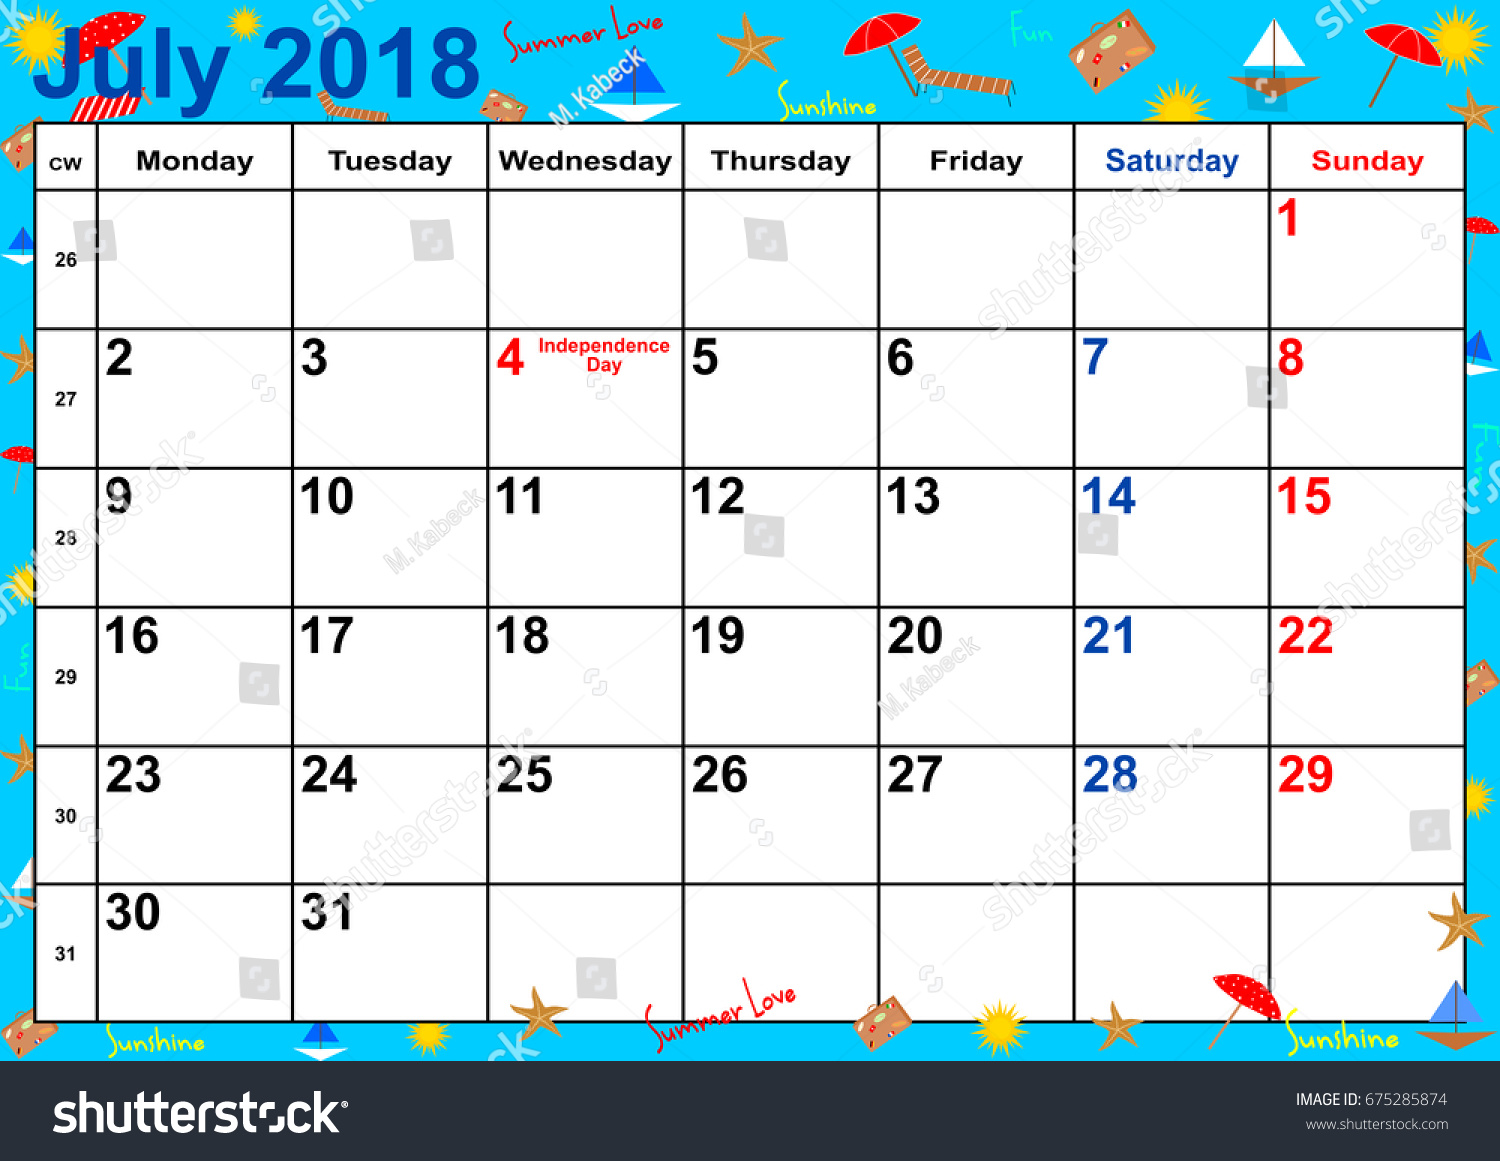 happy-july-desktop-calendar-iphone-wallpaper-ashlee-proffitt